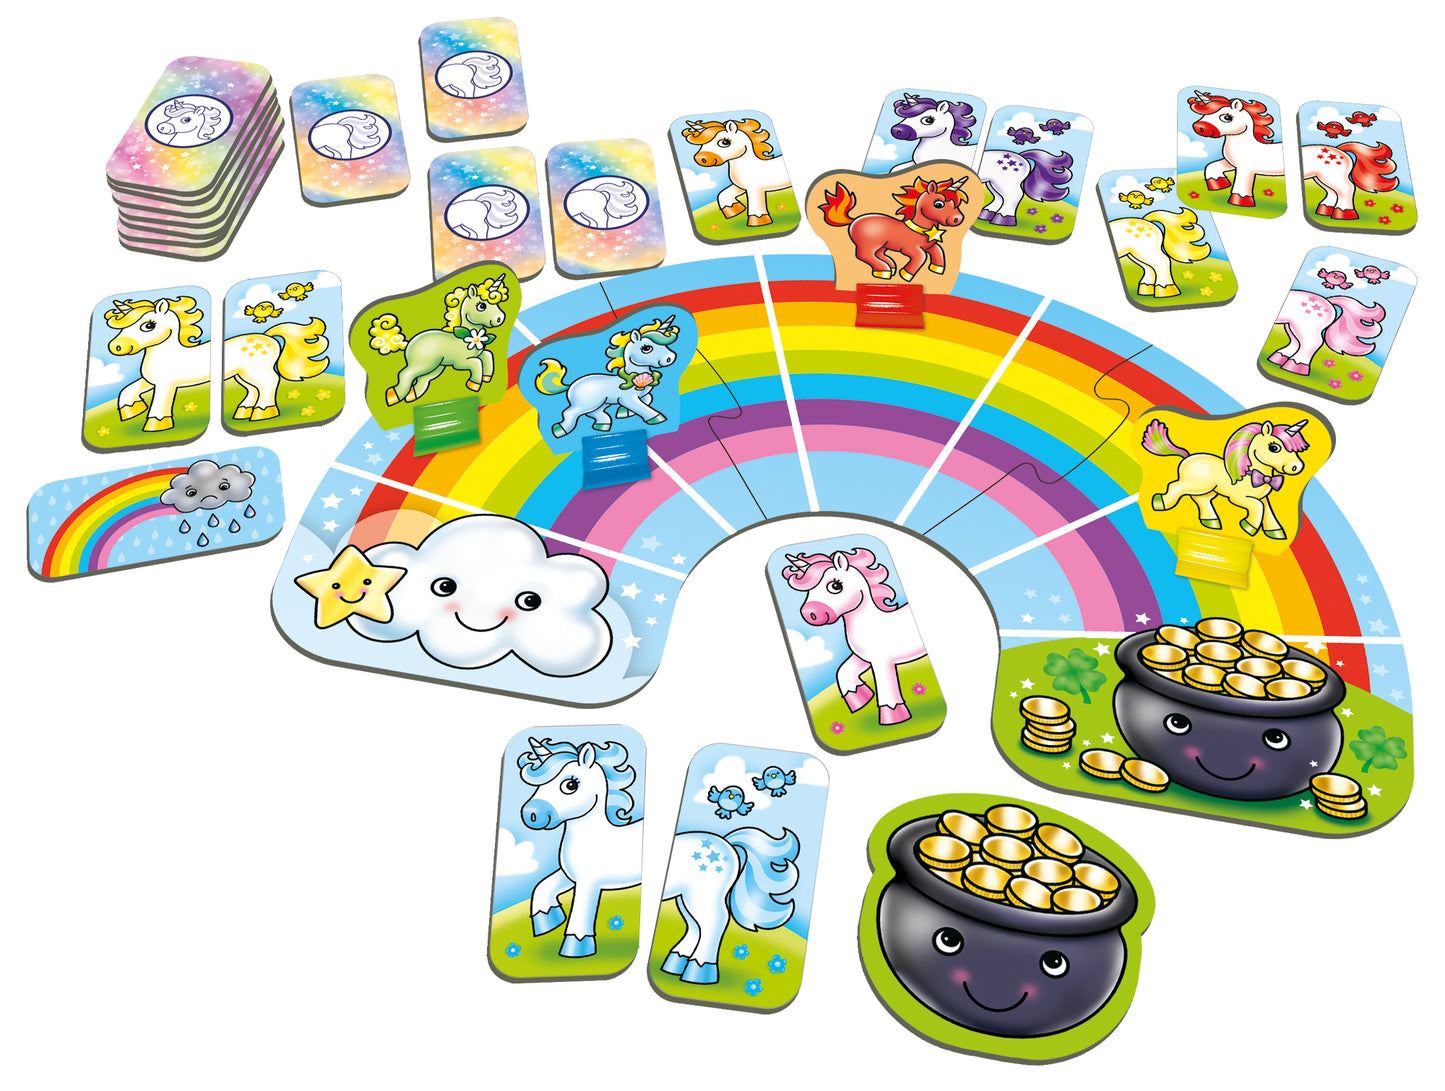 Orchard Toys Rainbow Unicorns Colour Matching Game